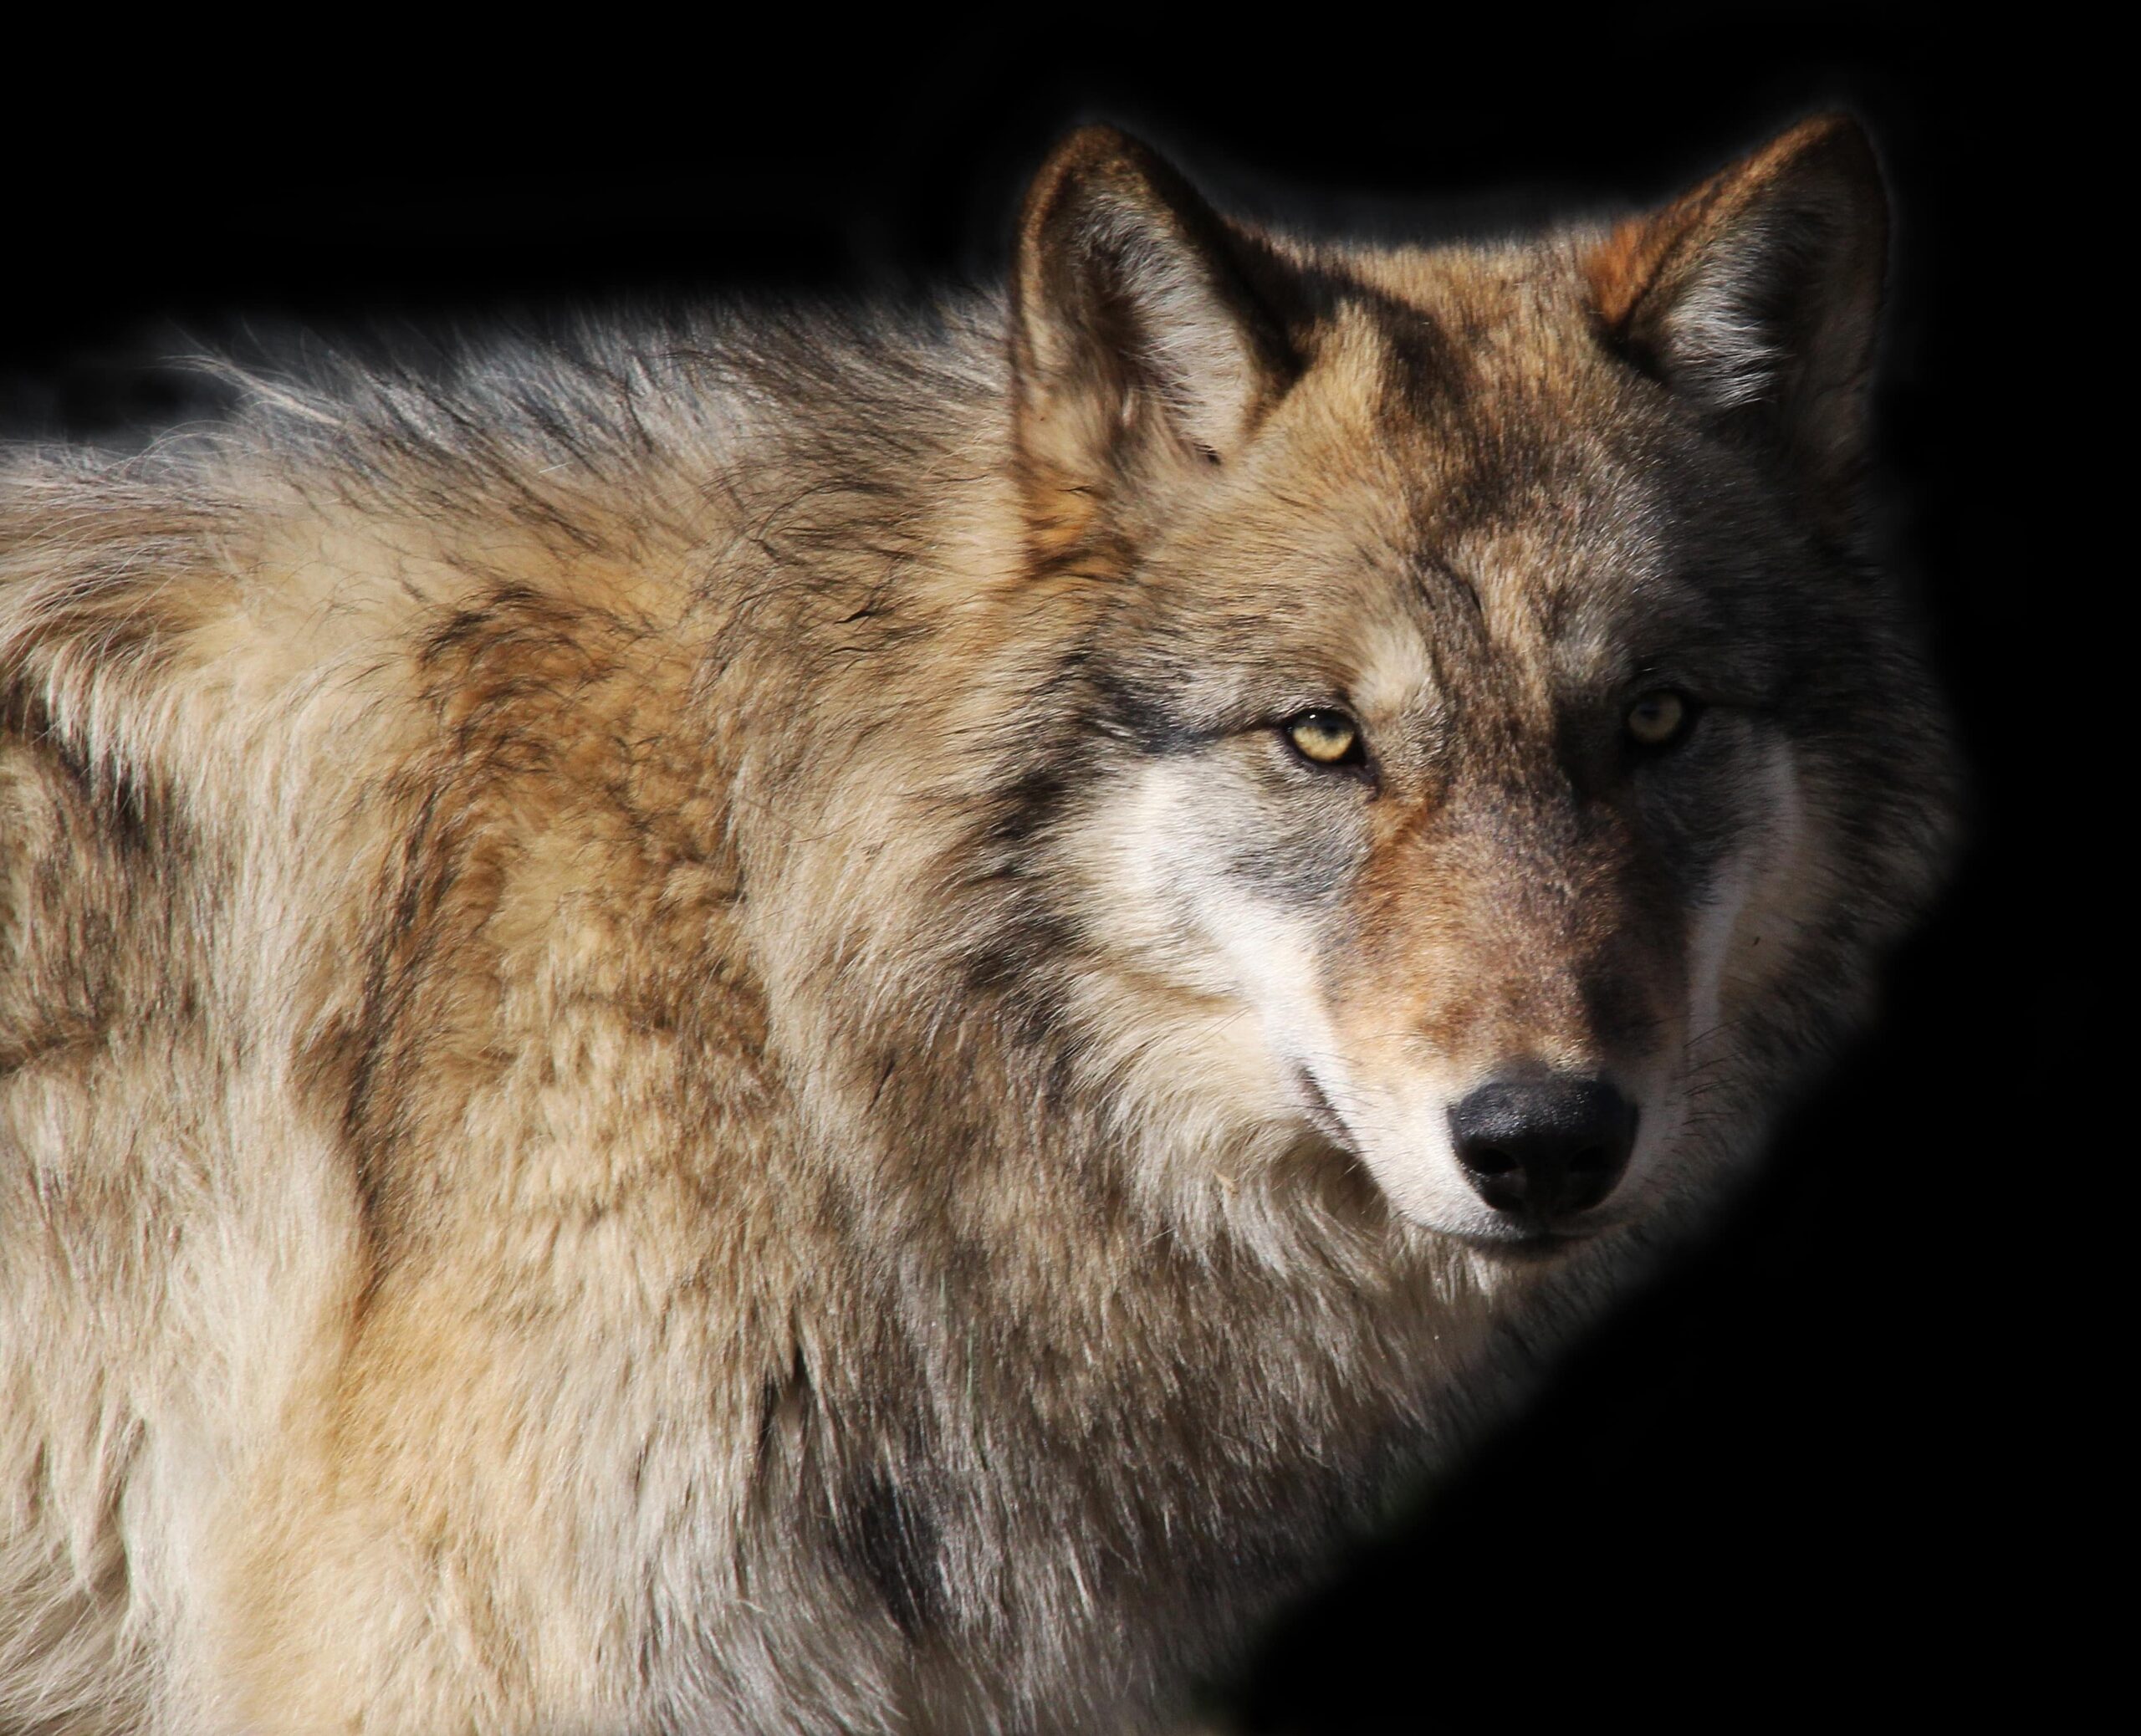 alaskan-gray-wolf-VFRLPNB-min-scaled.jpg